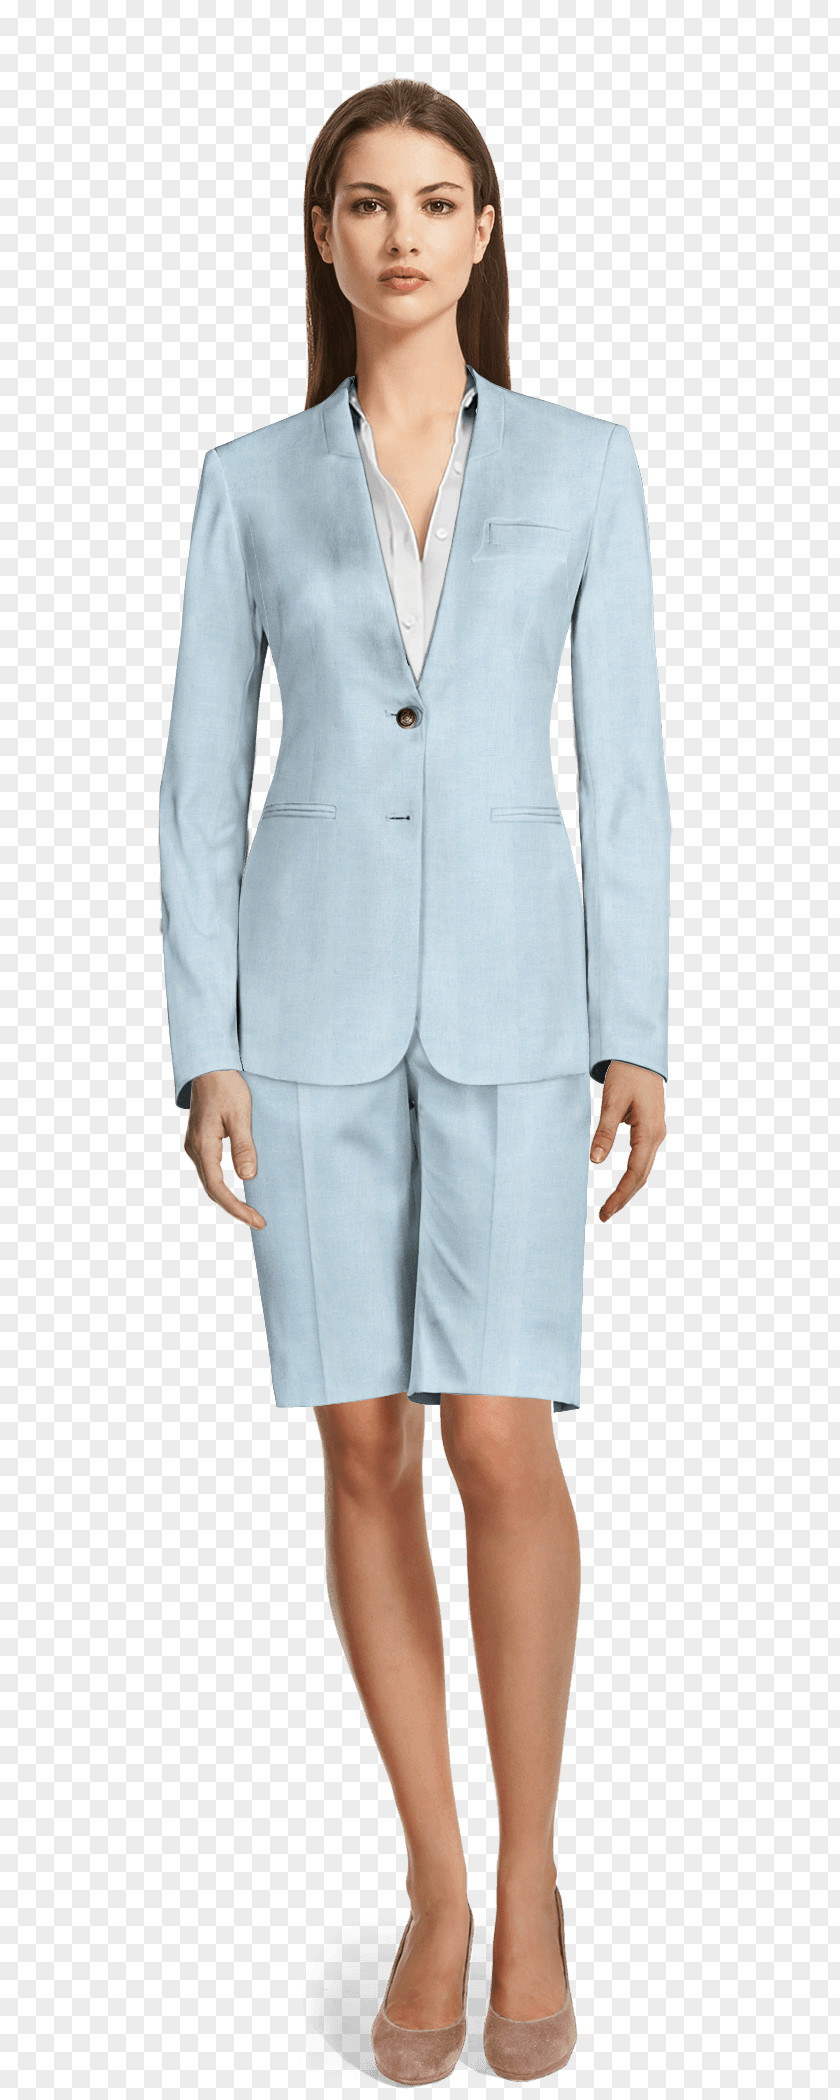 SUIT WOMEN Suit Clothing Jacket Blazer Sleeve PNG